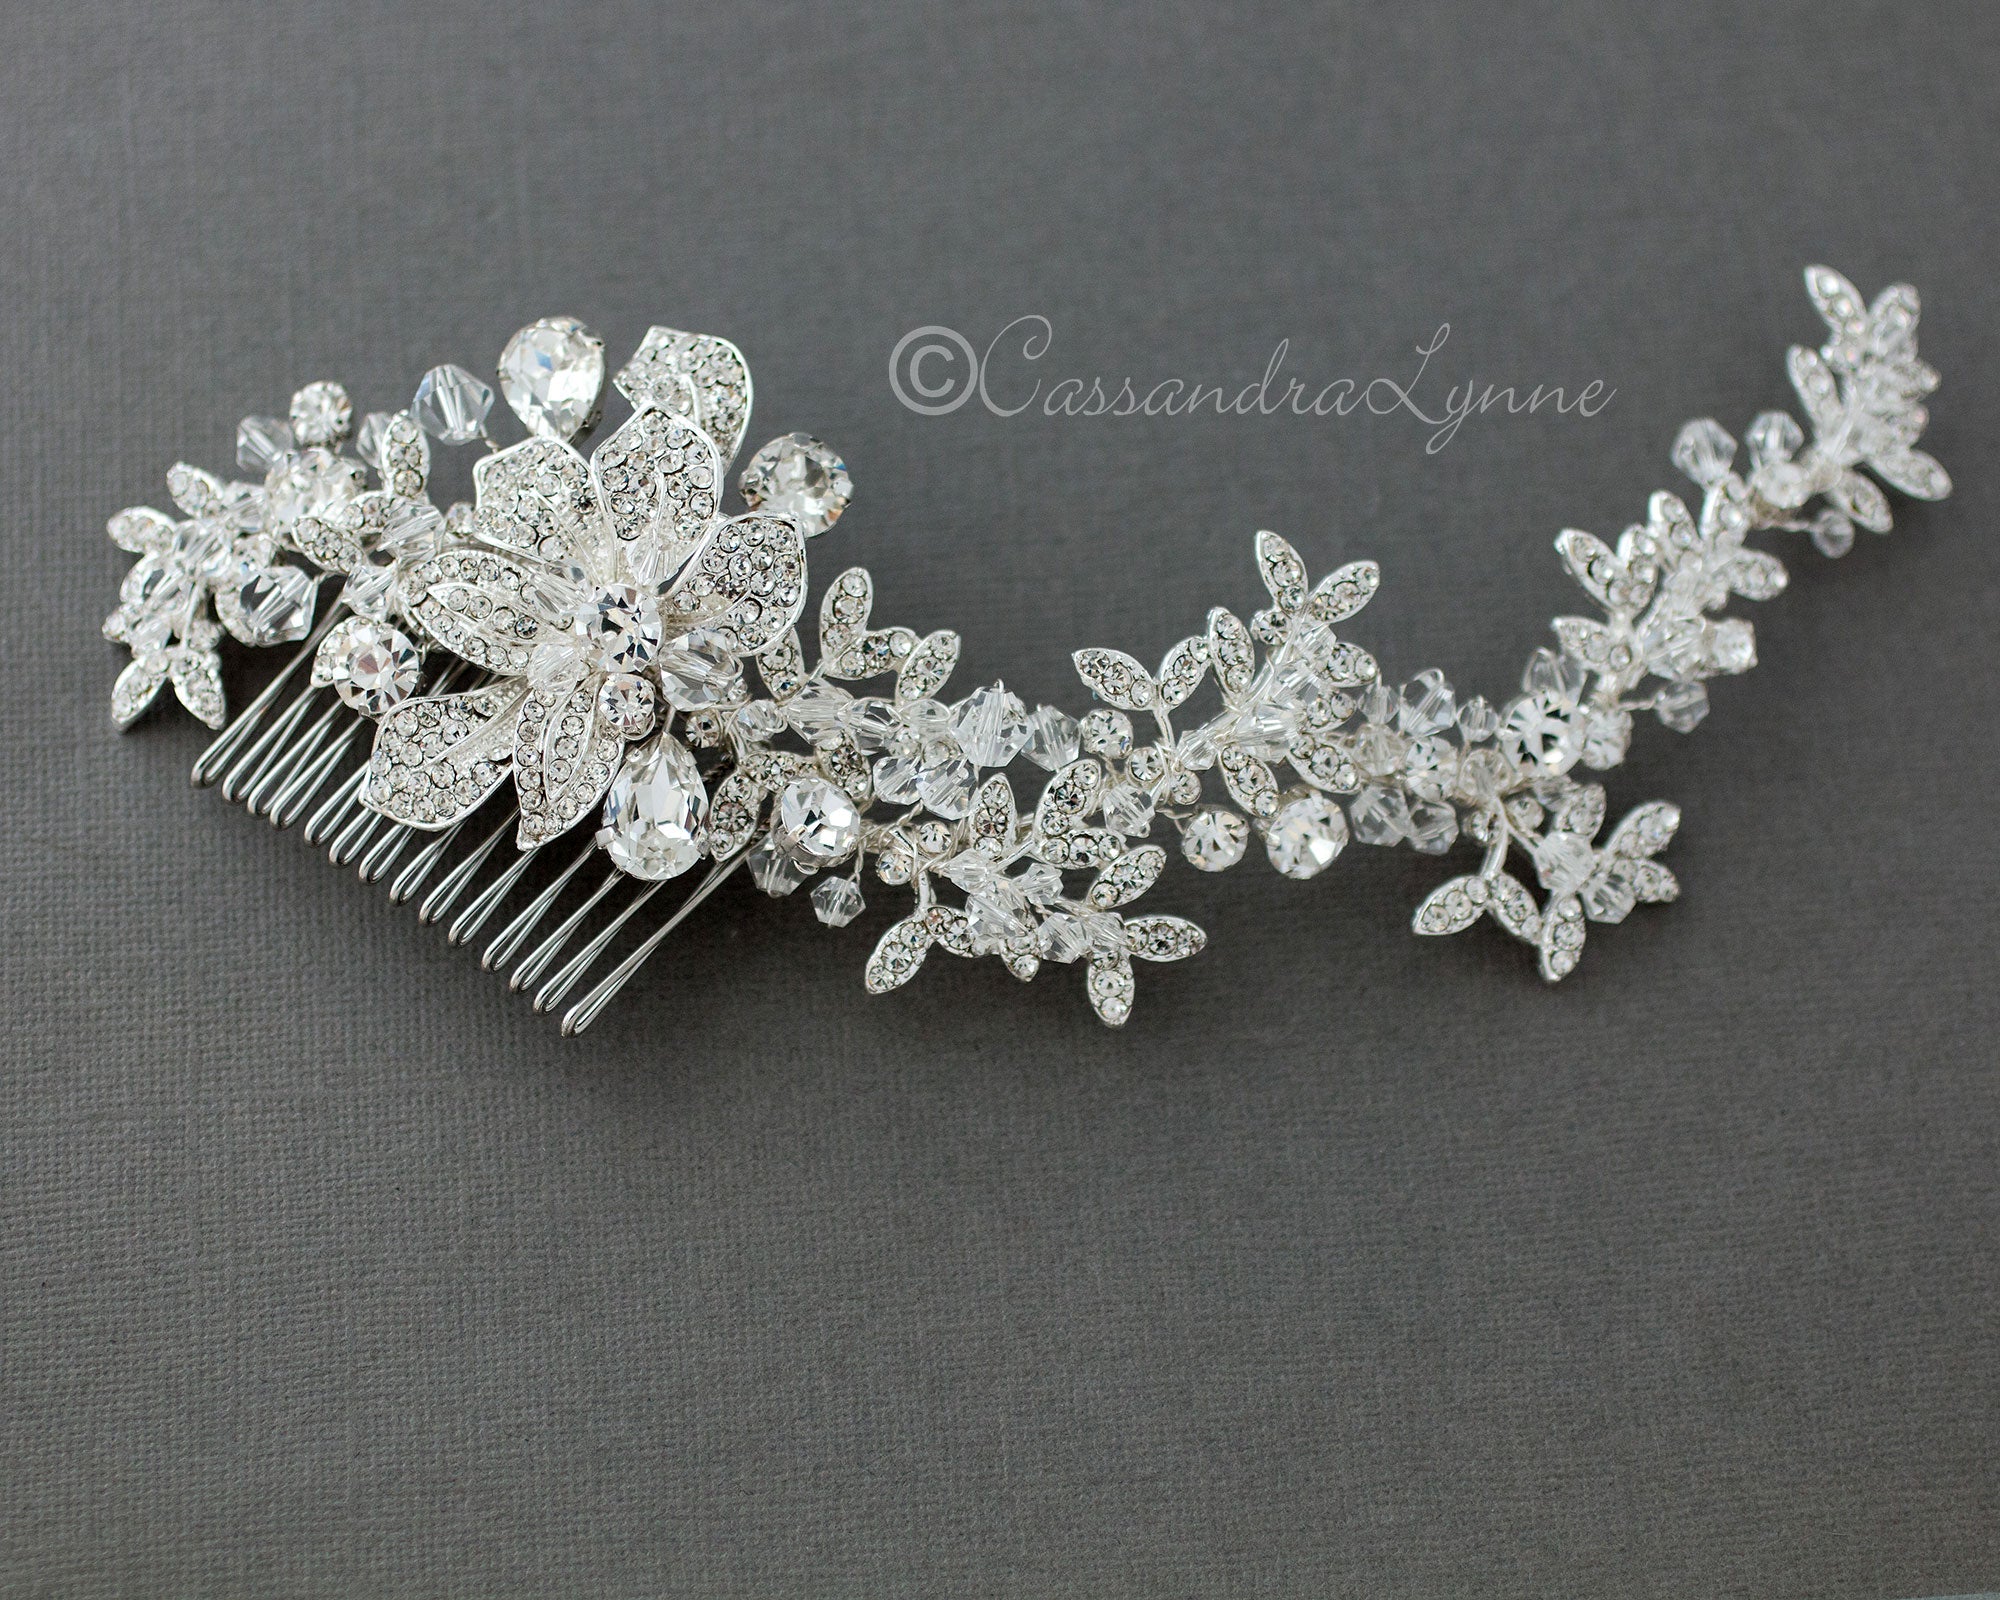 Crystal Bridal Hair Comb in a Rhinestone Vine Design - Cassandra Lynne